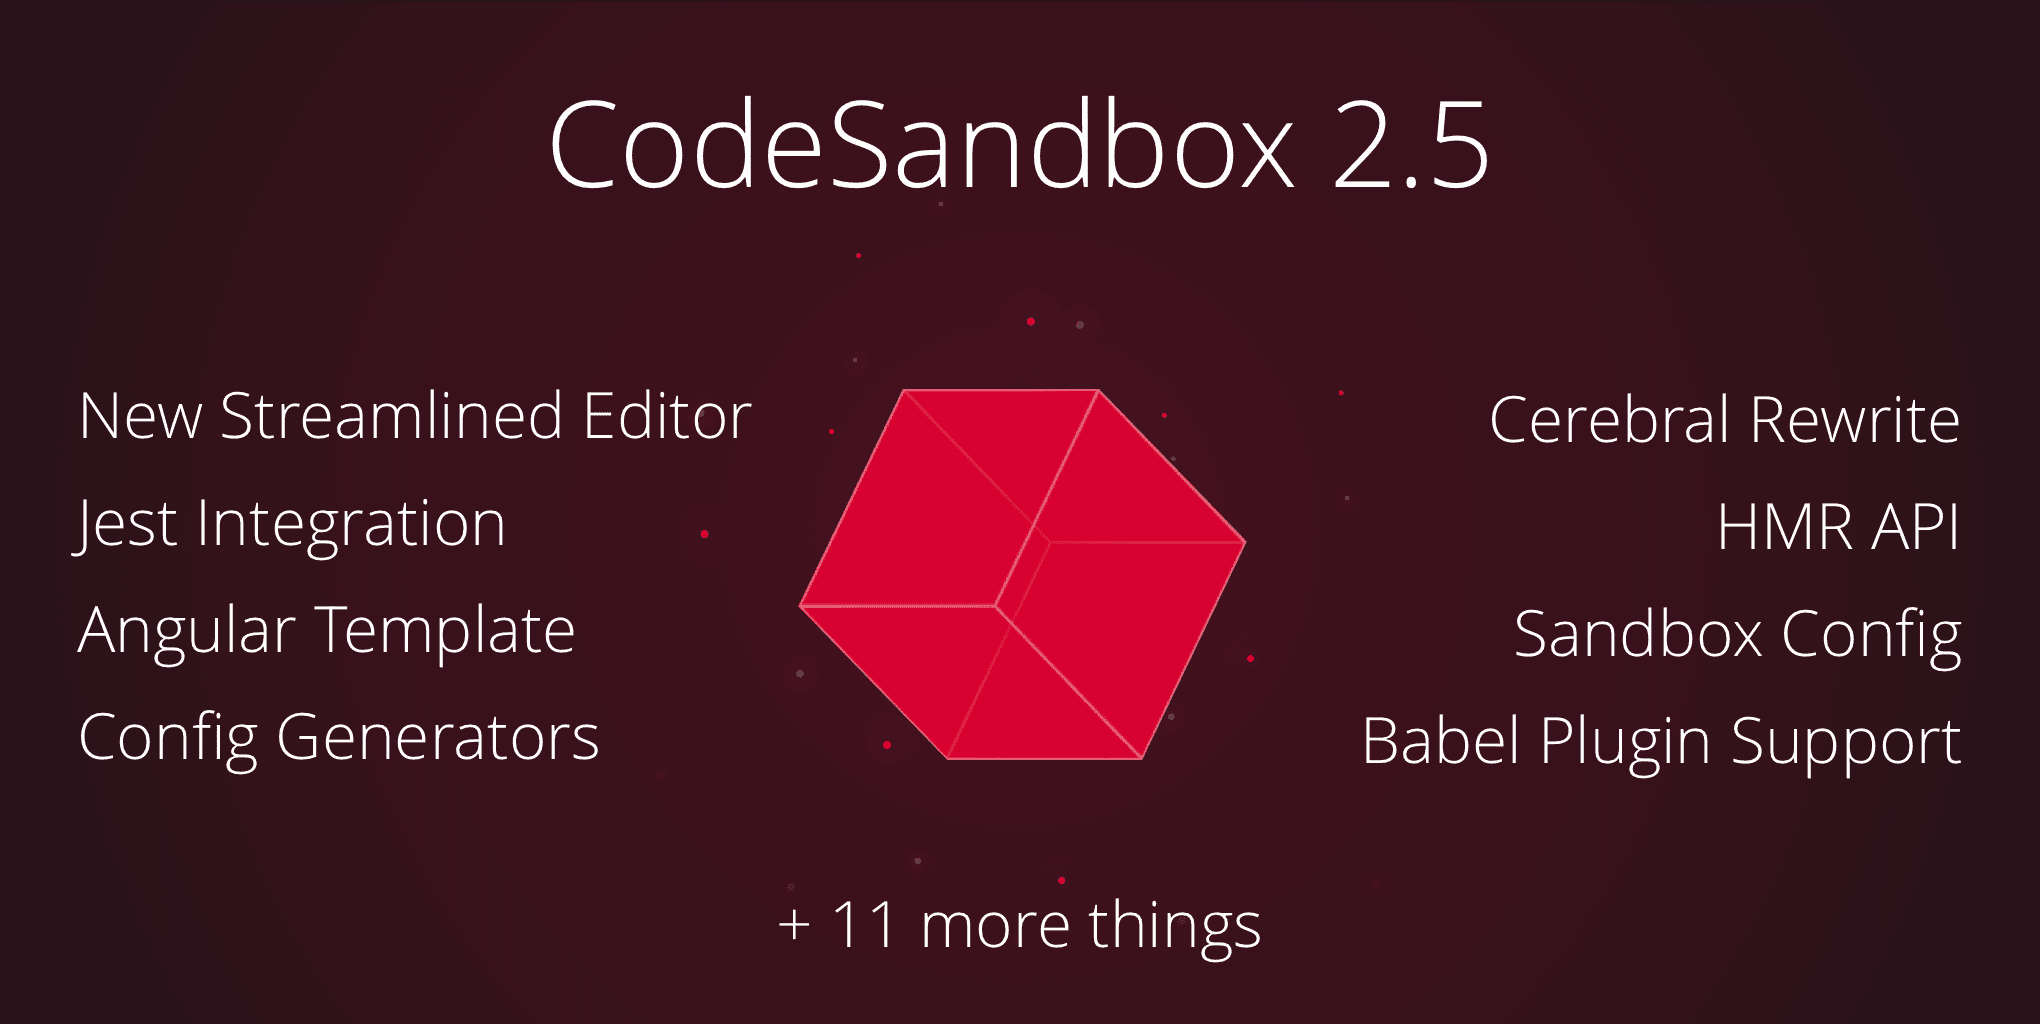 Announcing CodeSandbox 2.5